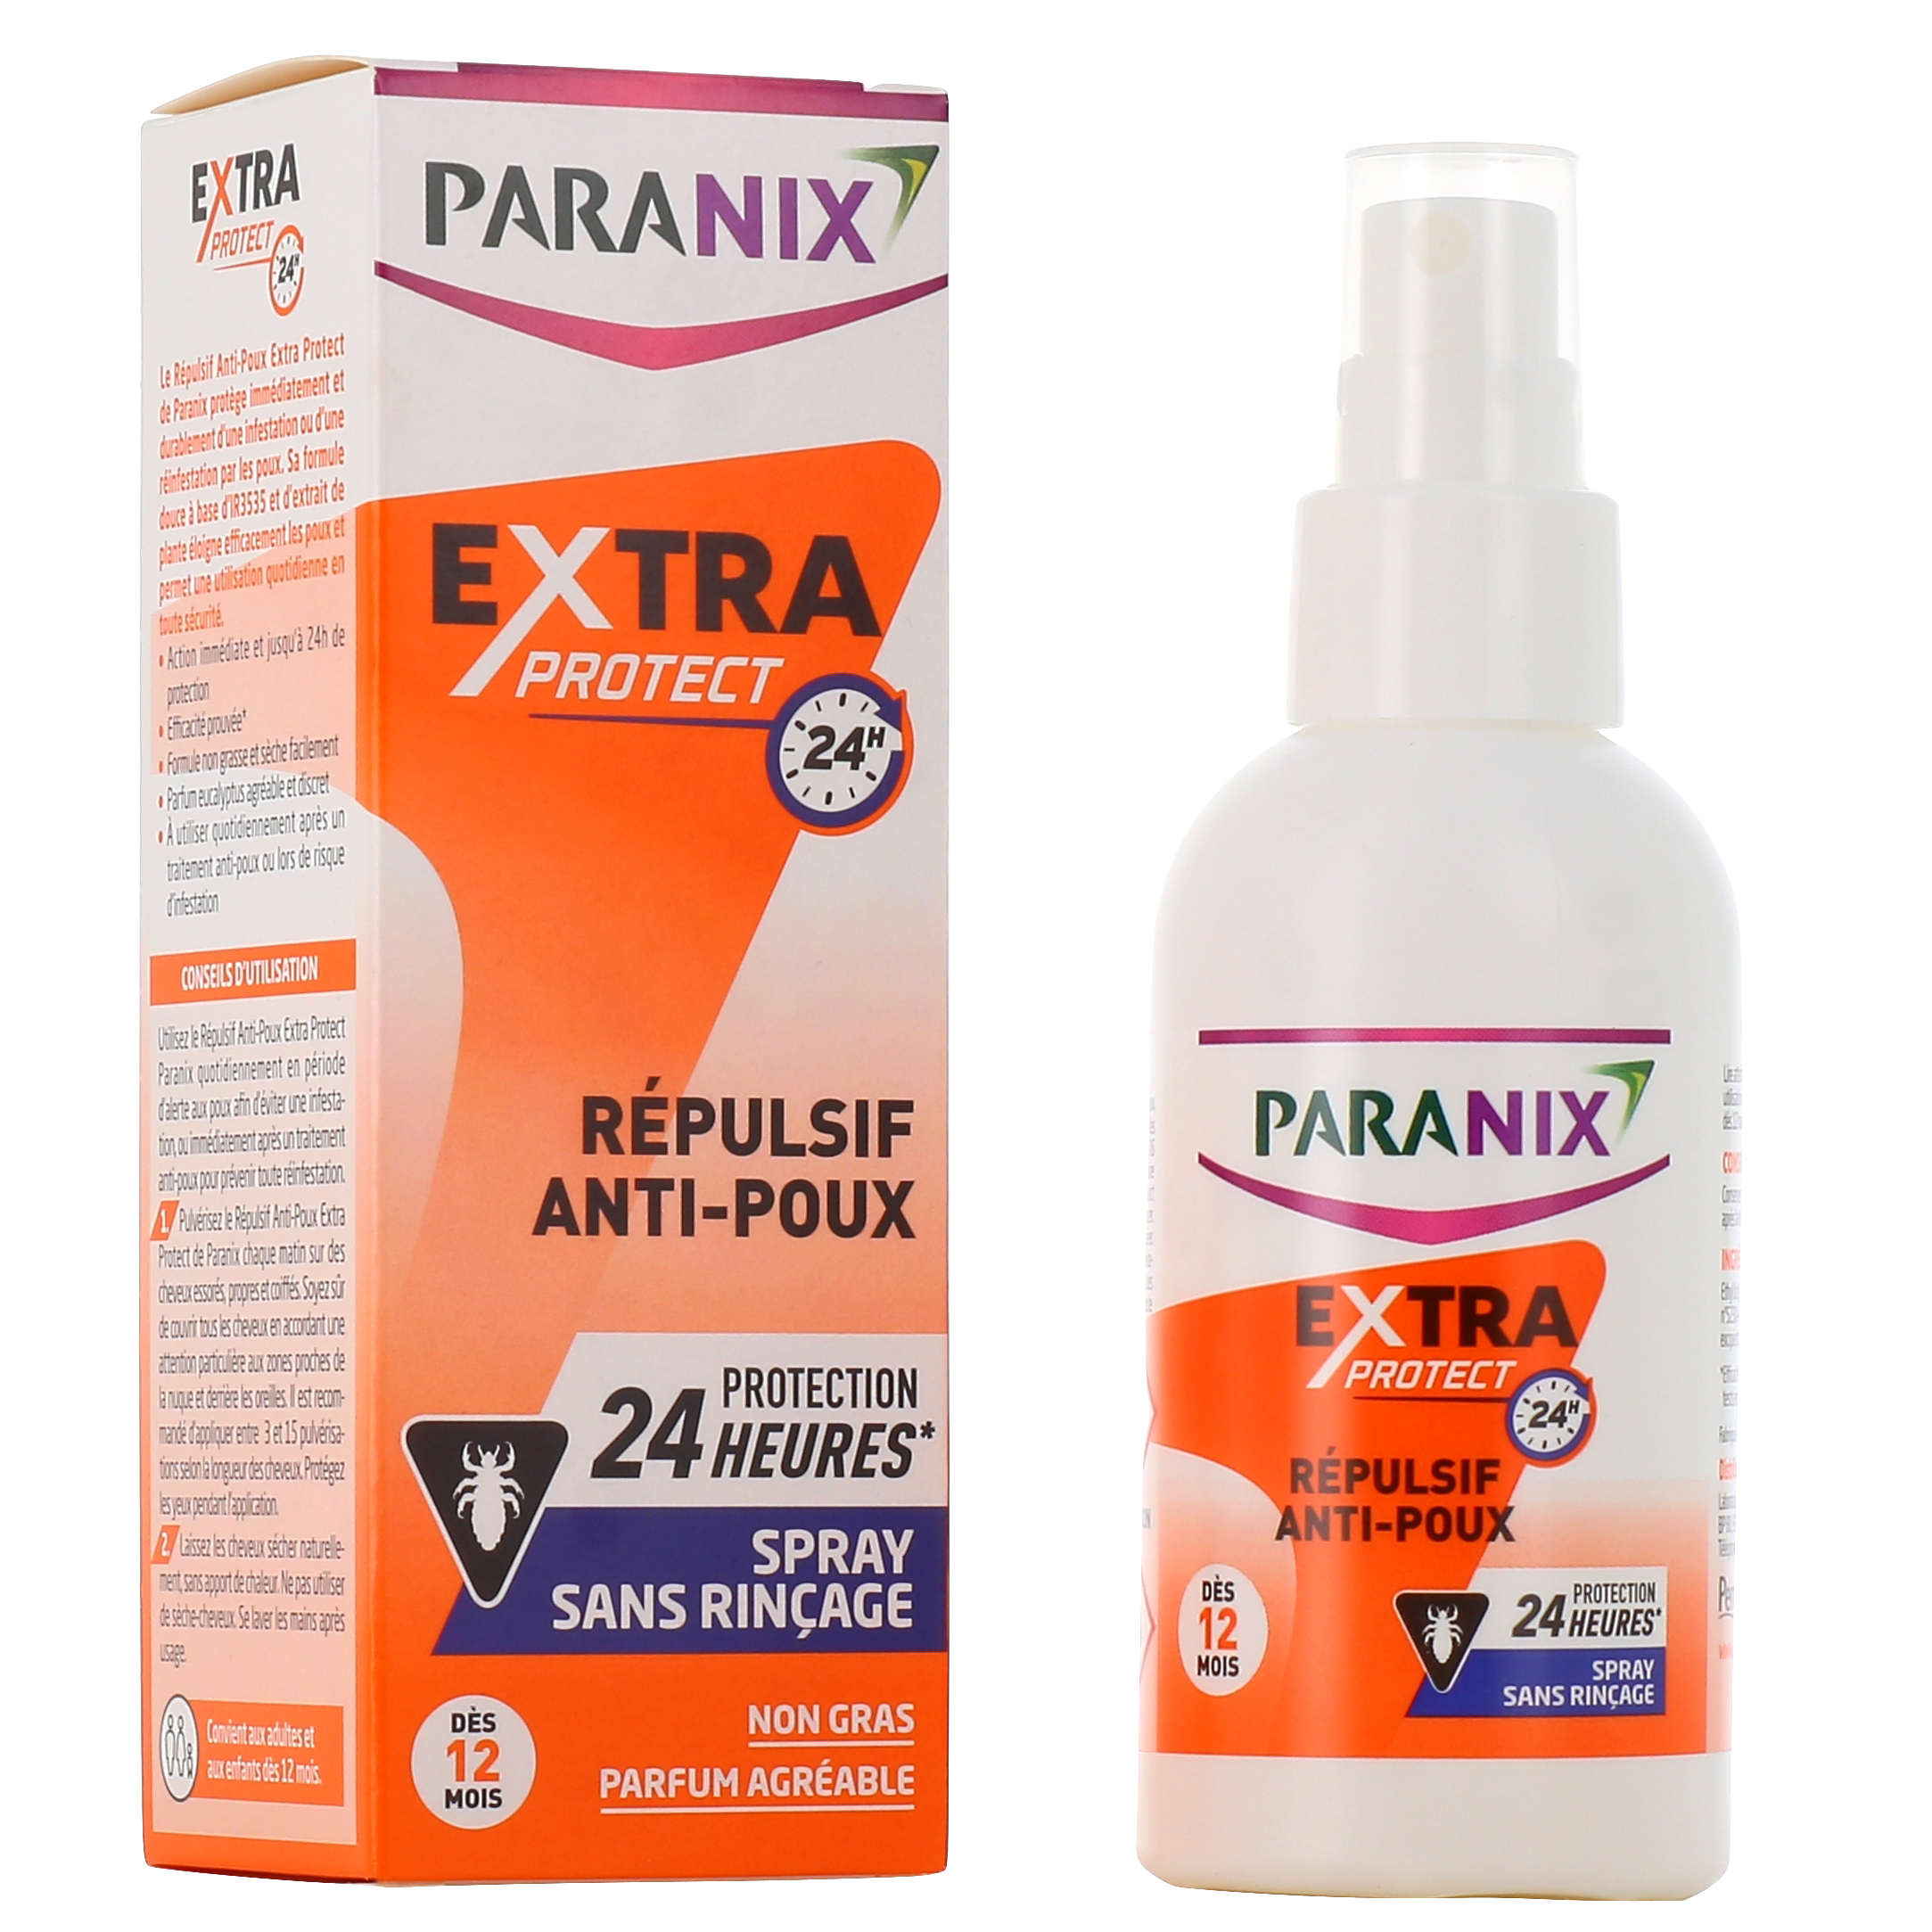 inolin's Spray Anti-poux Répulsif & Préventif 100ml à prix pas cher